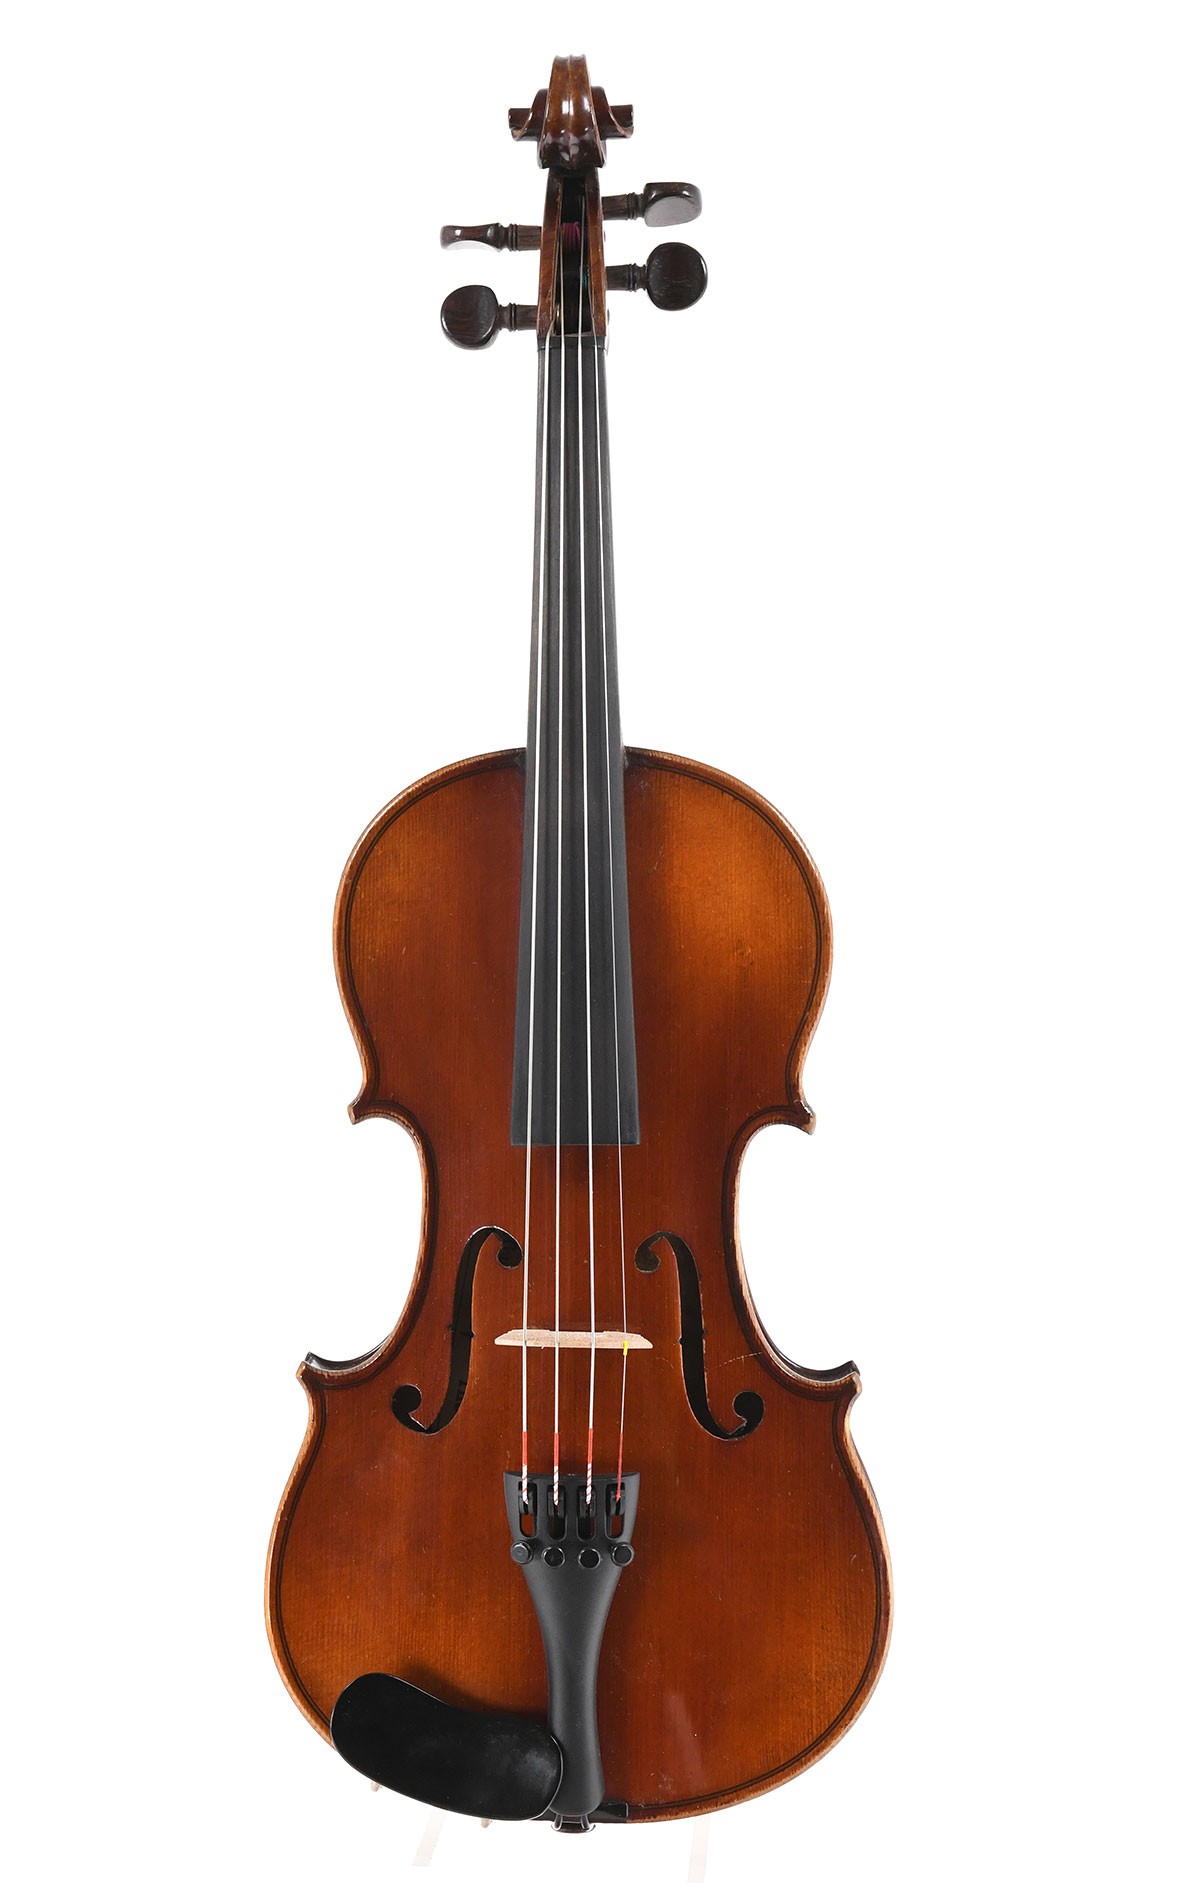 Mirecourt的古董1/2小提琴，仿照瓜奈里乌斯的模型